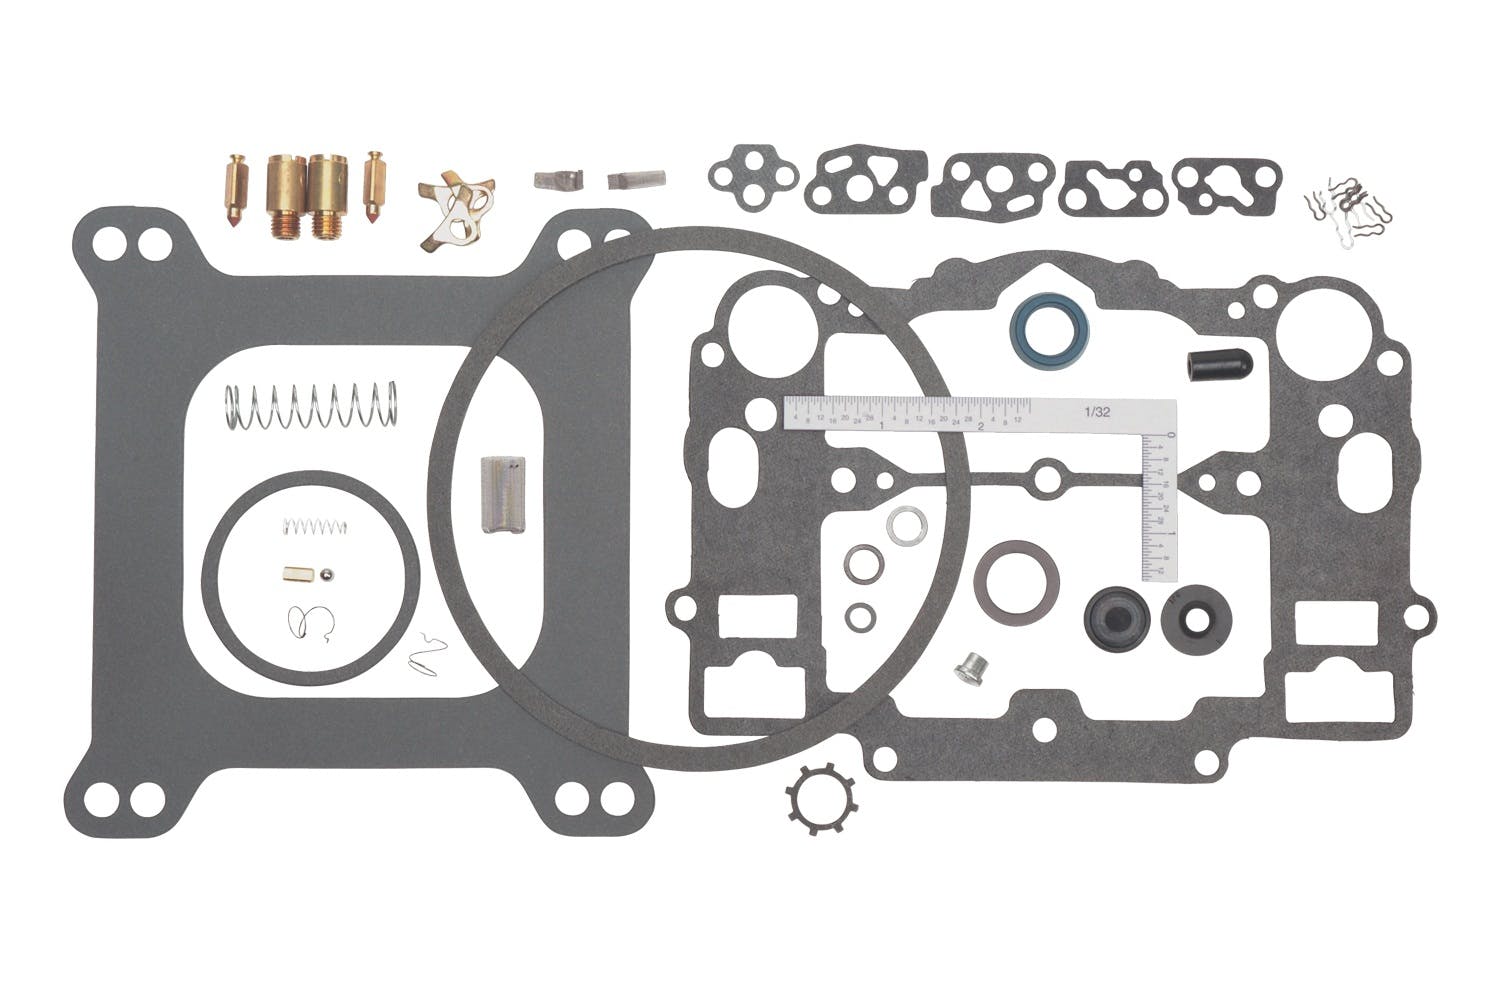 Edelbrock 1477 Carburetor Rebuild and Maintenance Kit for All Edelbrock Square-Bore Carbs